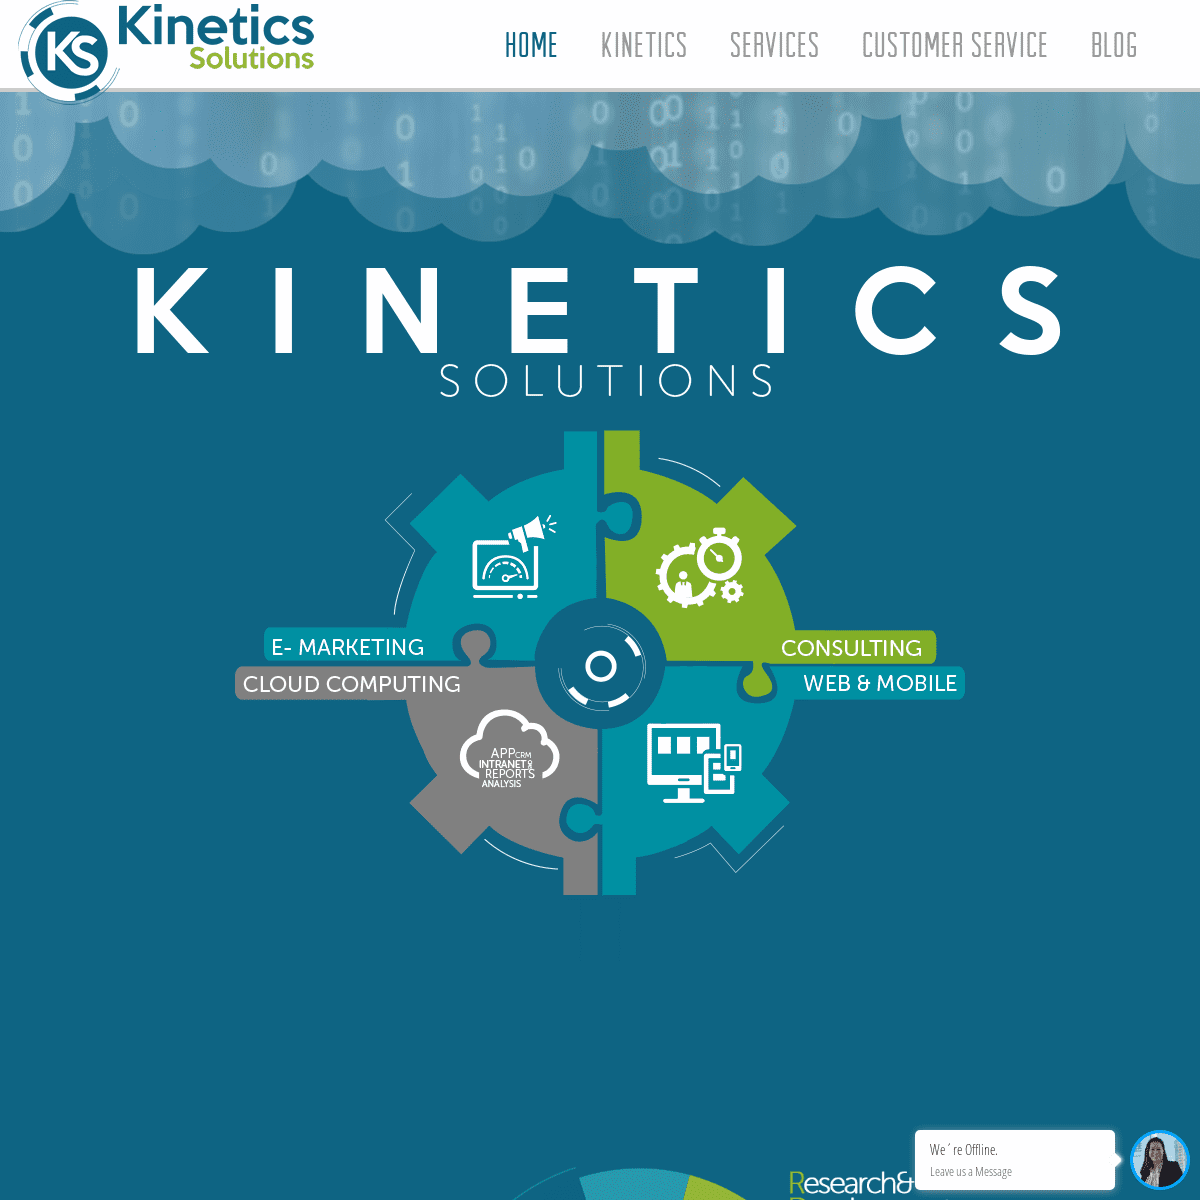 A complete backup of kineticssolutions.com